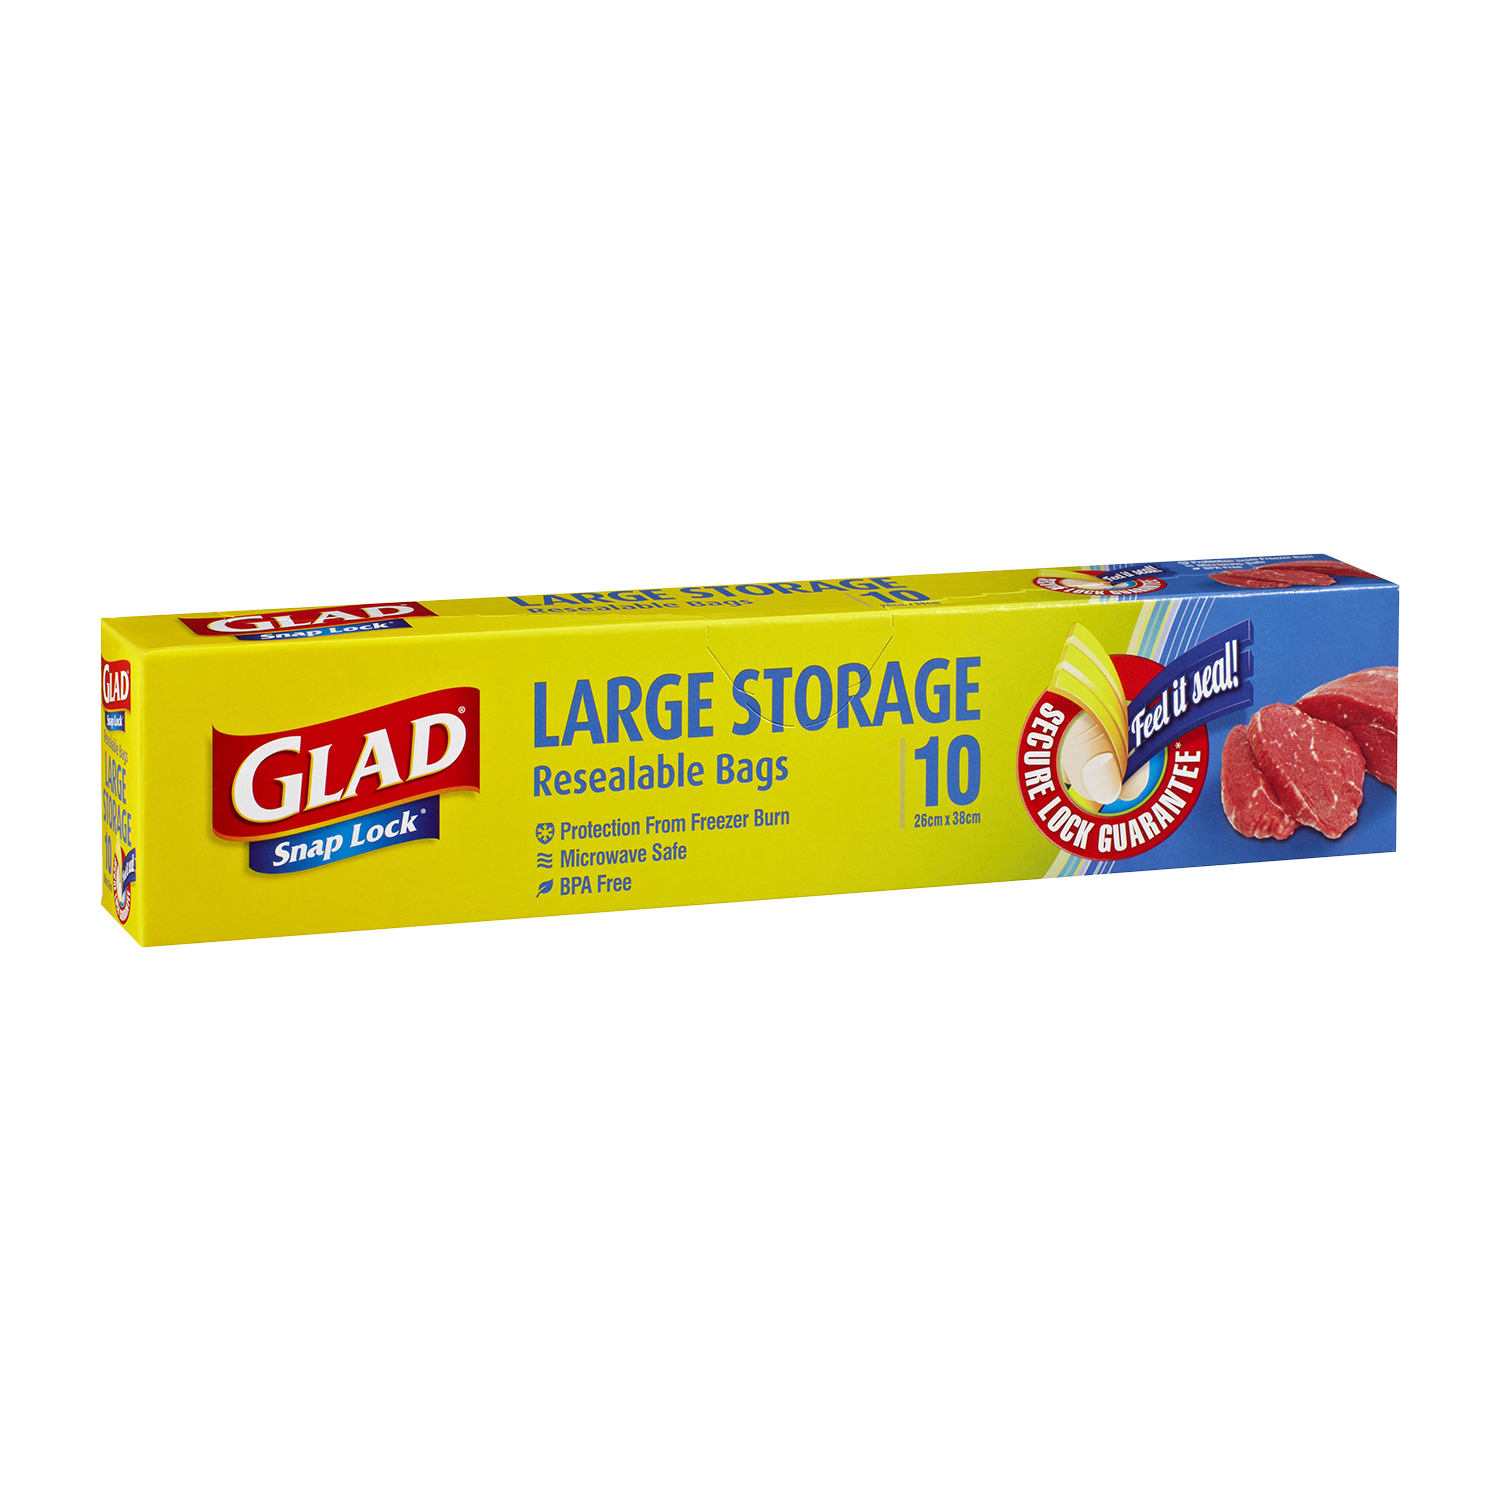 https://www.glad.com.au/wp-content/uploads/sites/2/2020/12/Glad-Snaplock-Large-Storage-Resealable-Bags-10pk.png